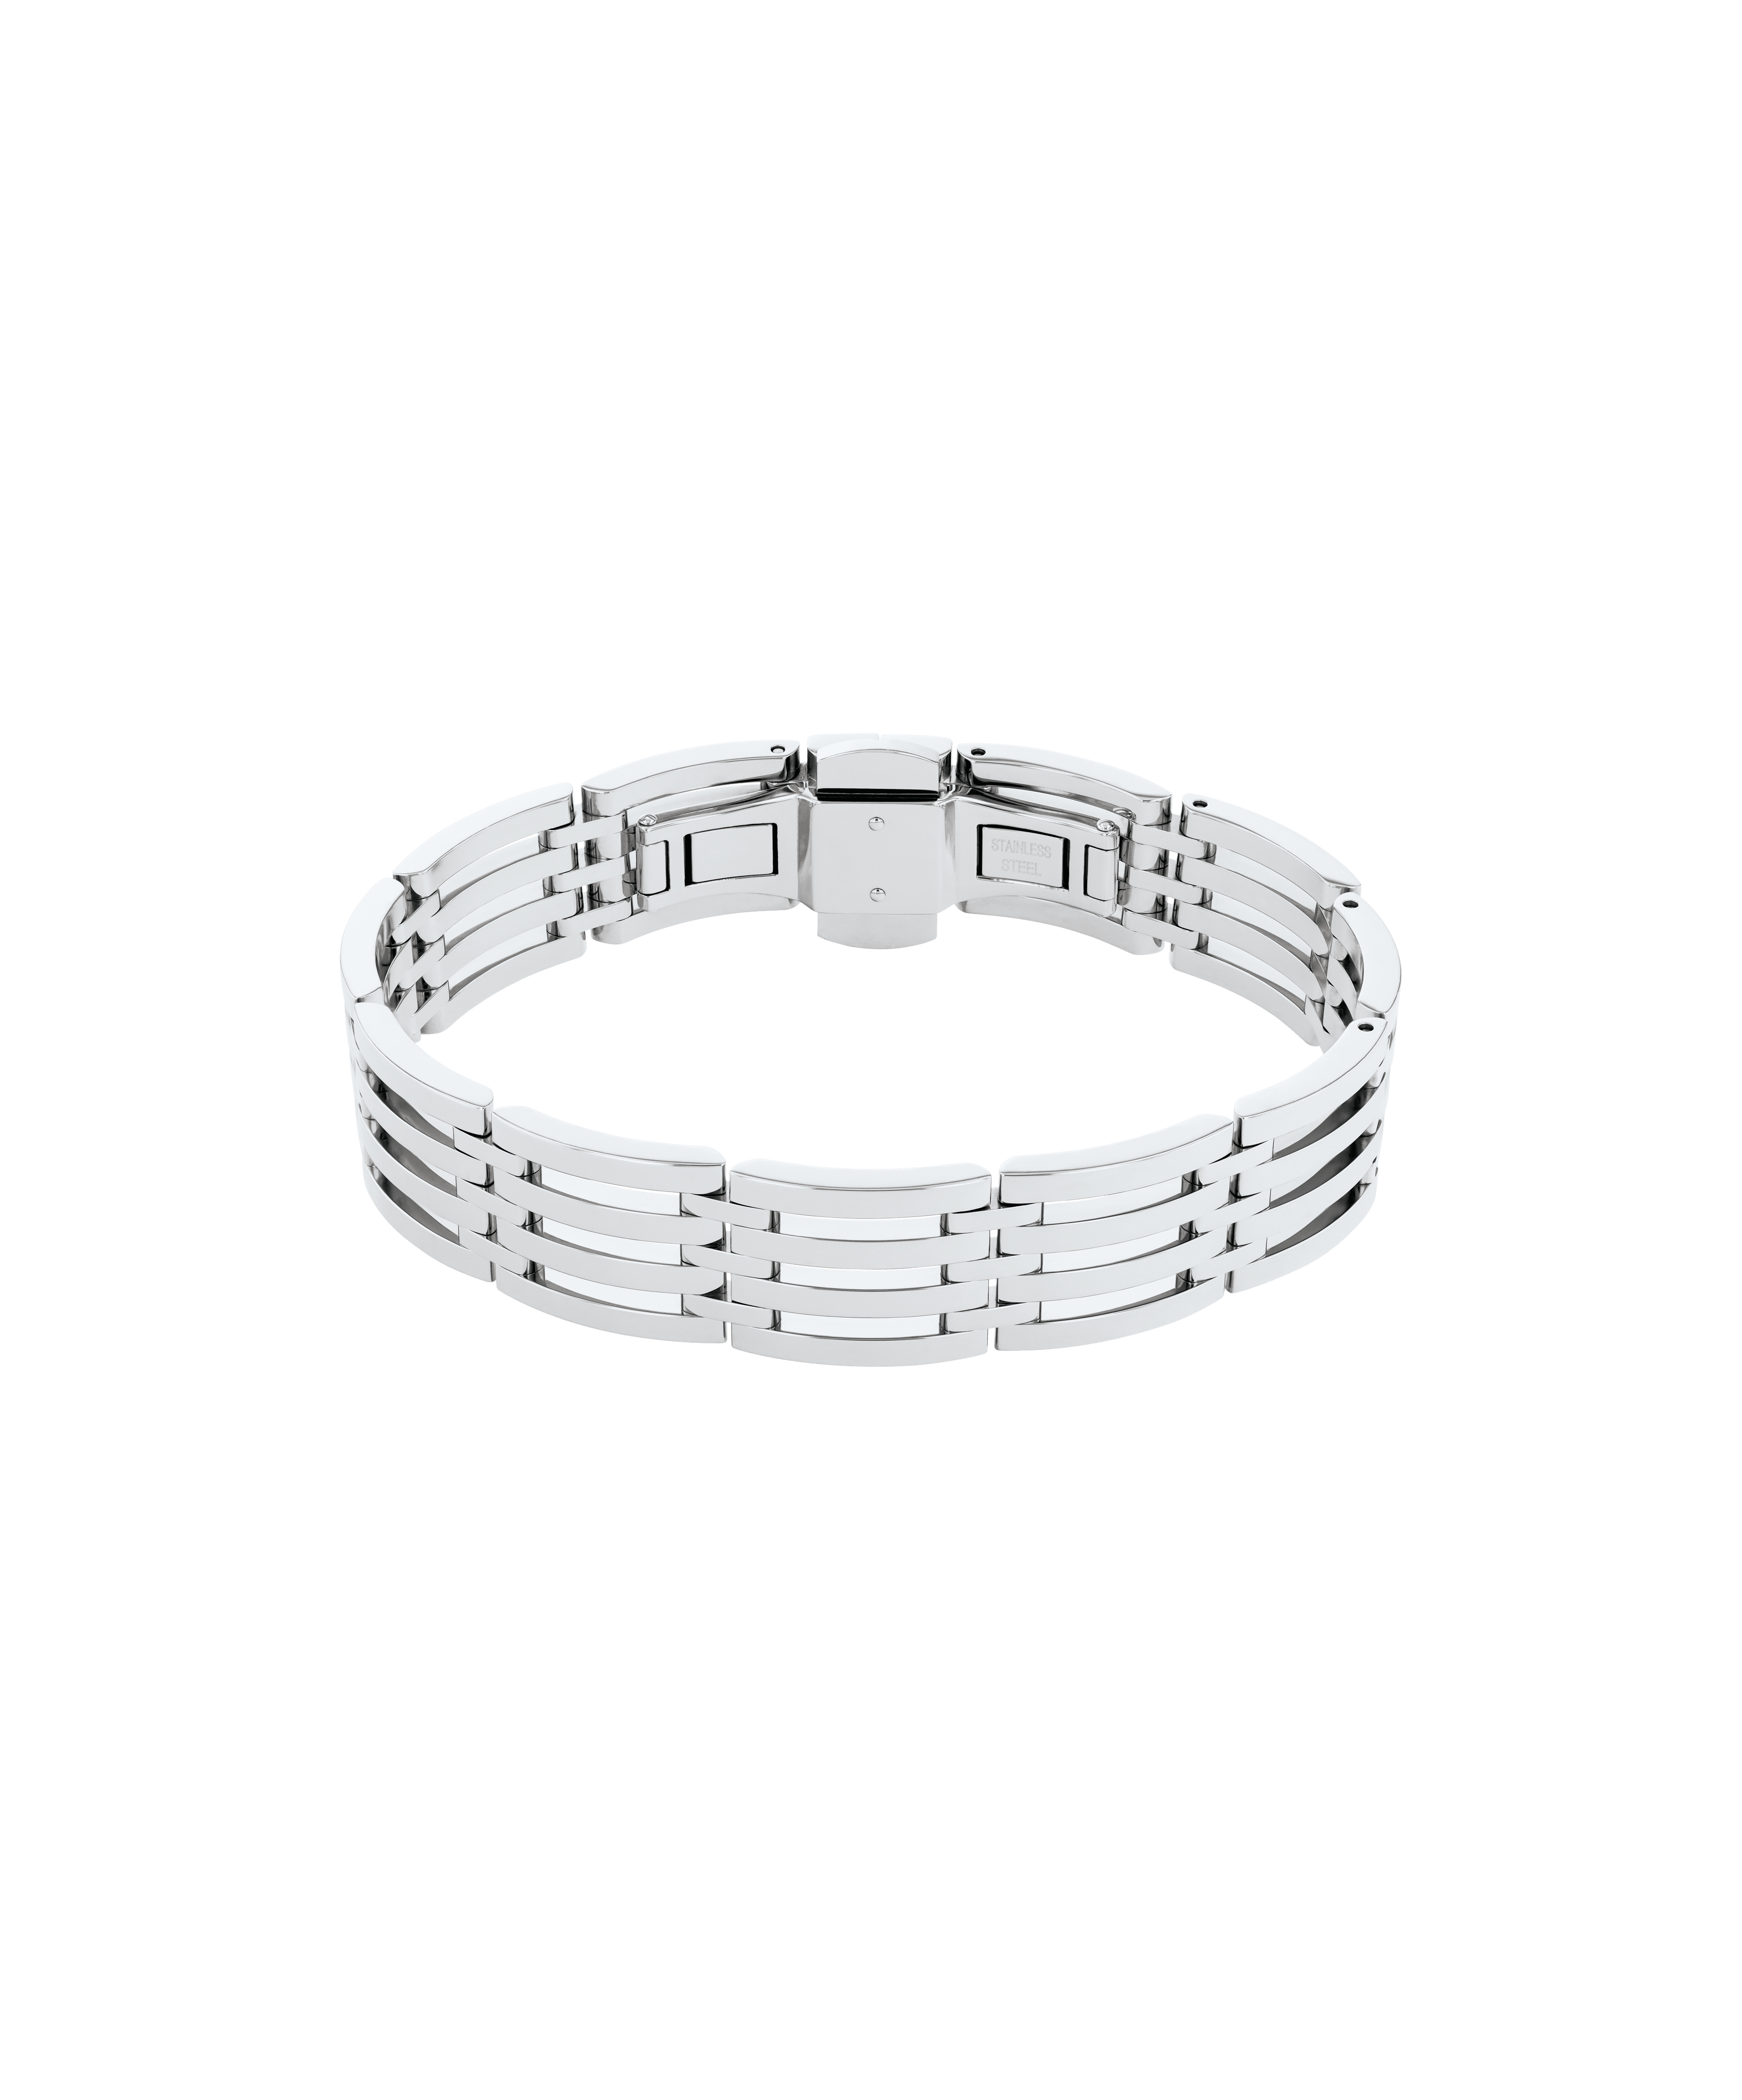 Tree of life bracelet for Men - Mens Jewelry Black Bracelet for him - Nadin  Art Design - Personalized Jewelry